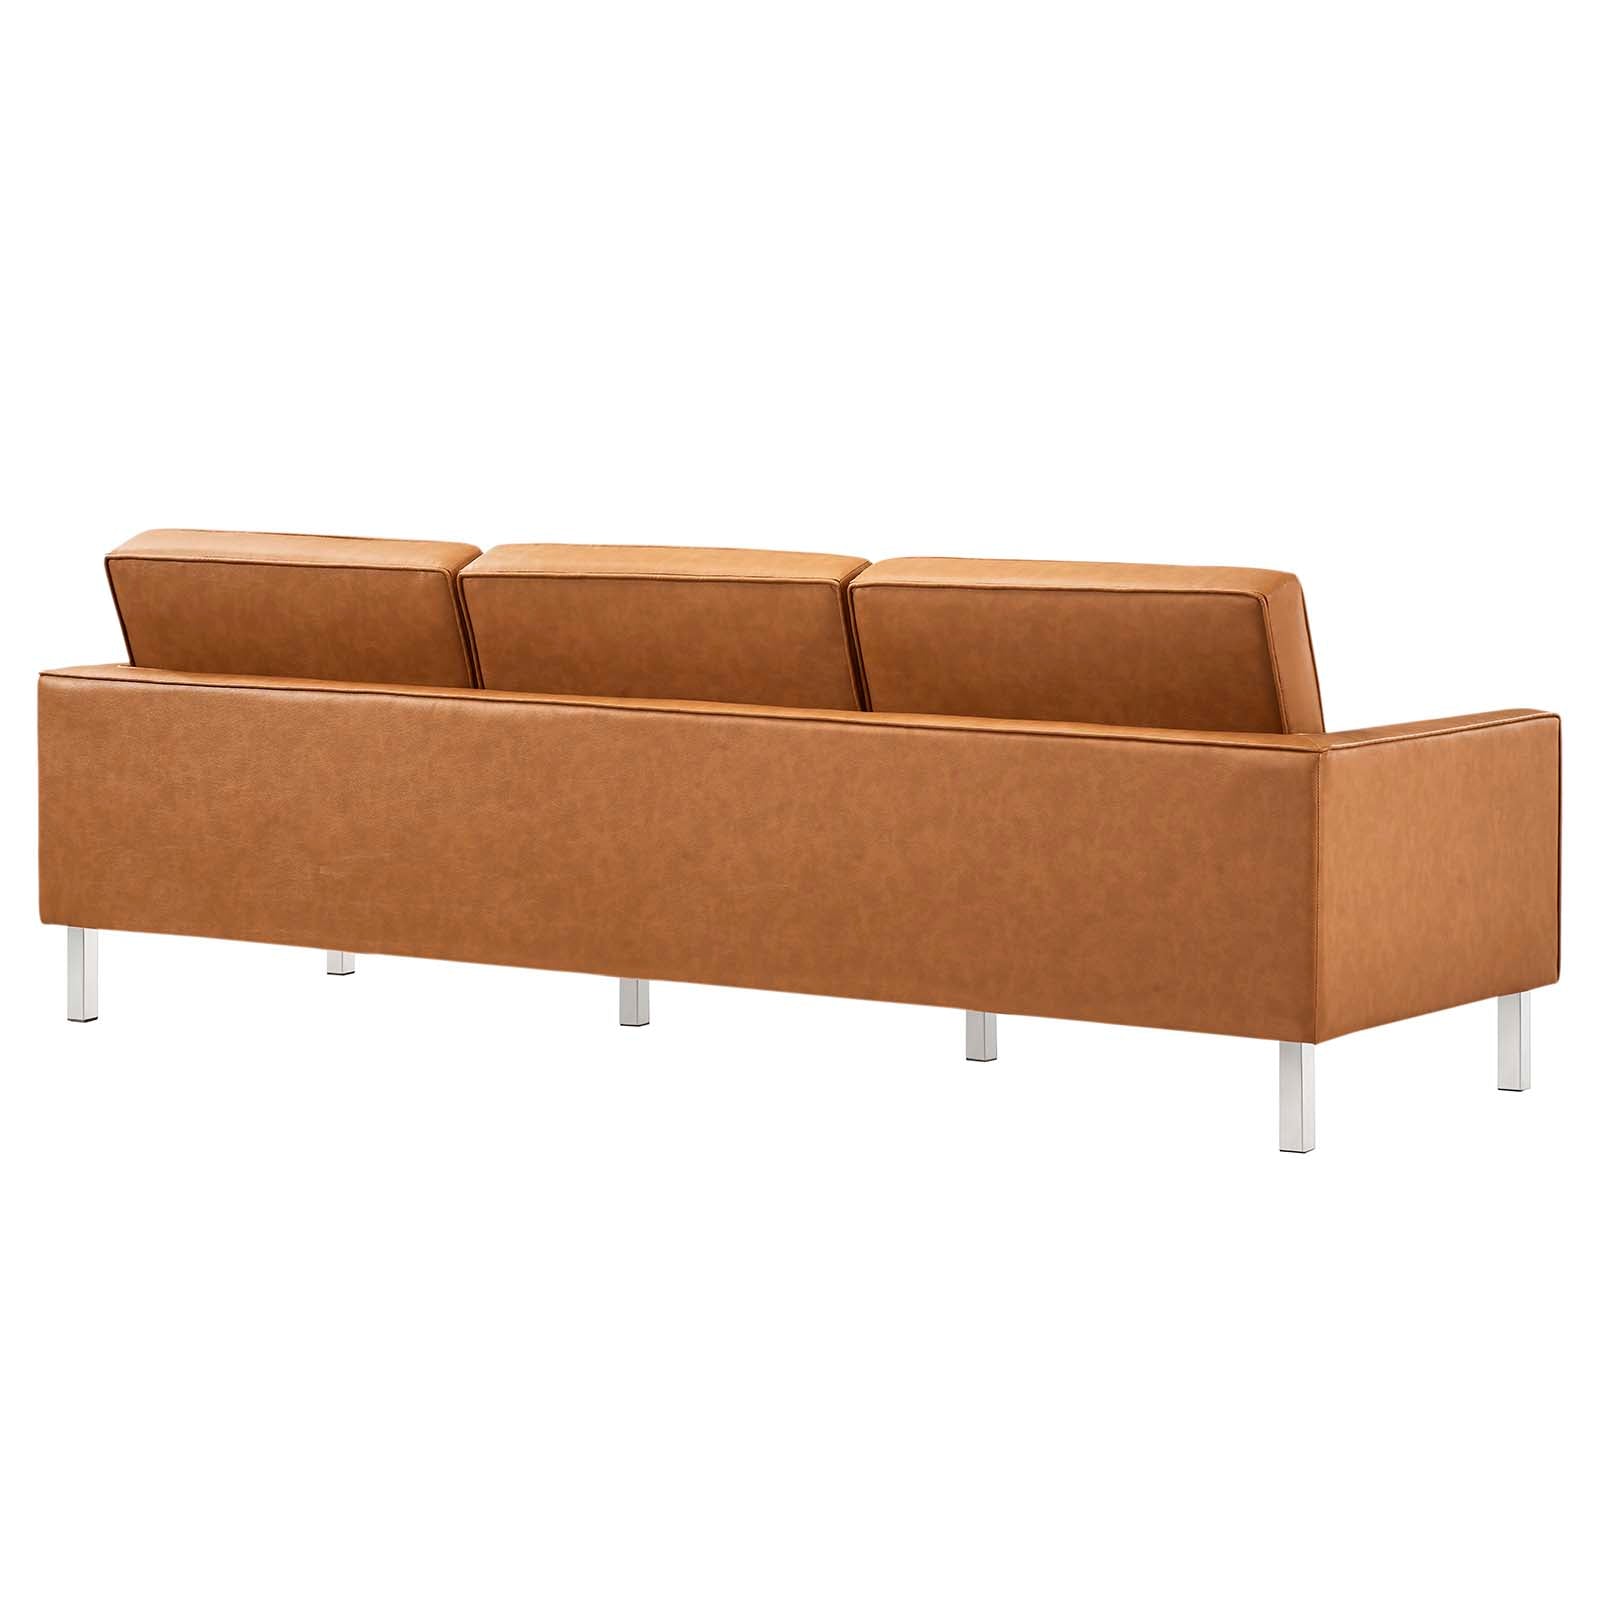 Loft Tufted Vegan Leather Sofa and Ottoman Set-Sofa Set-Modway-Wall2Wall Furnishings